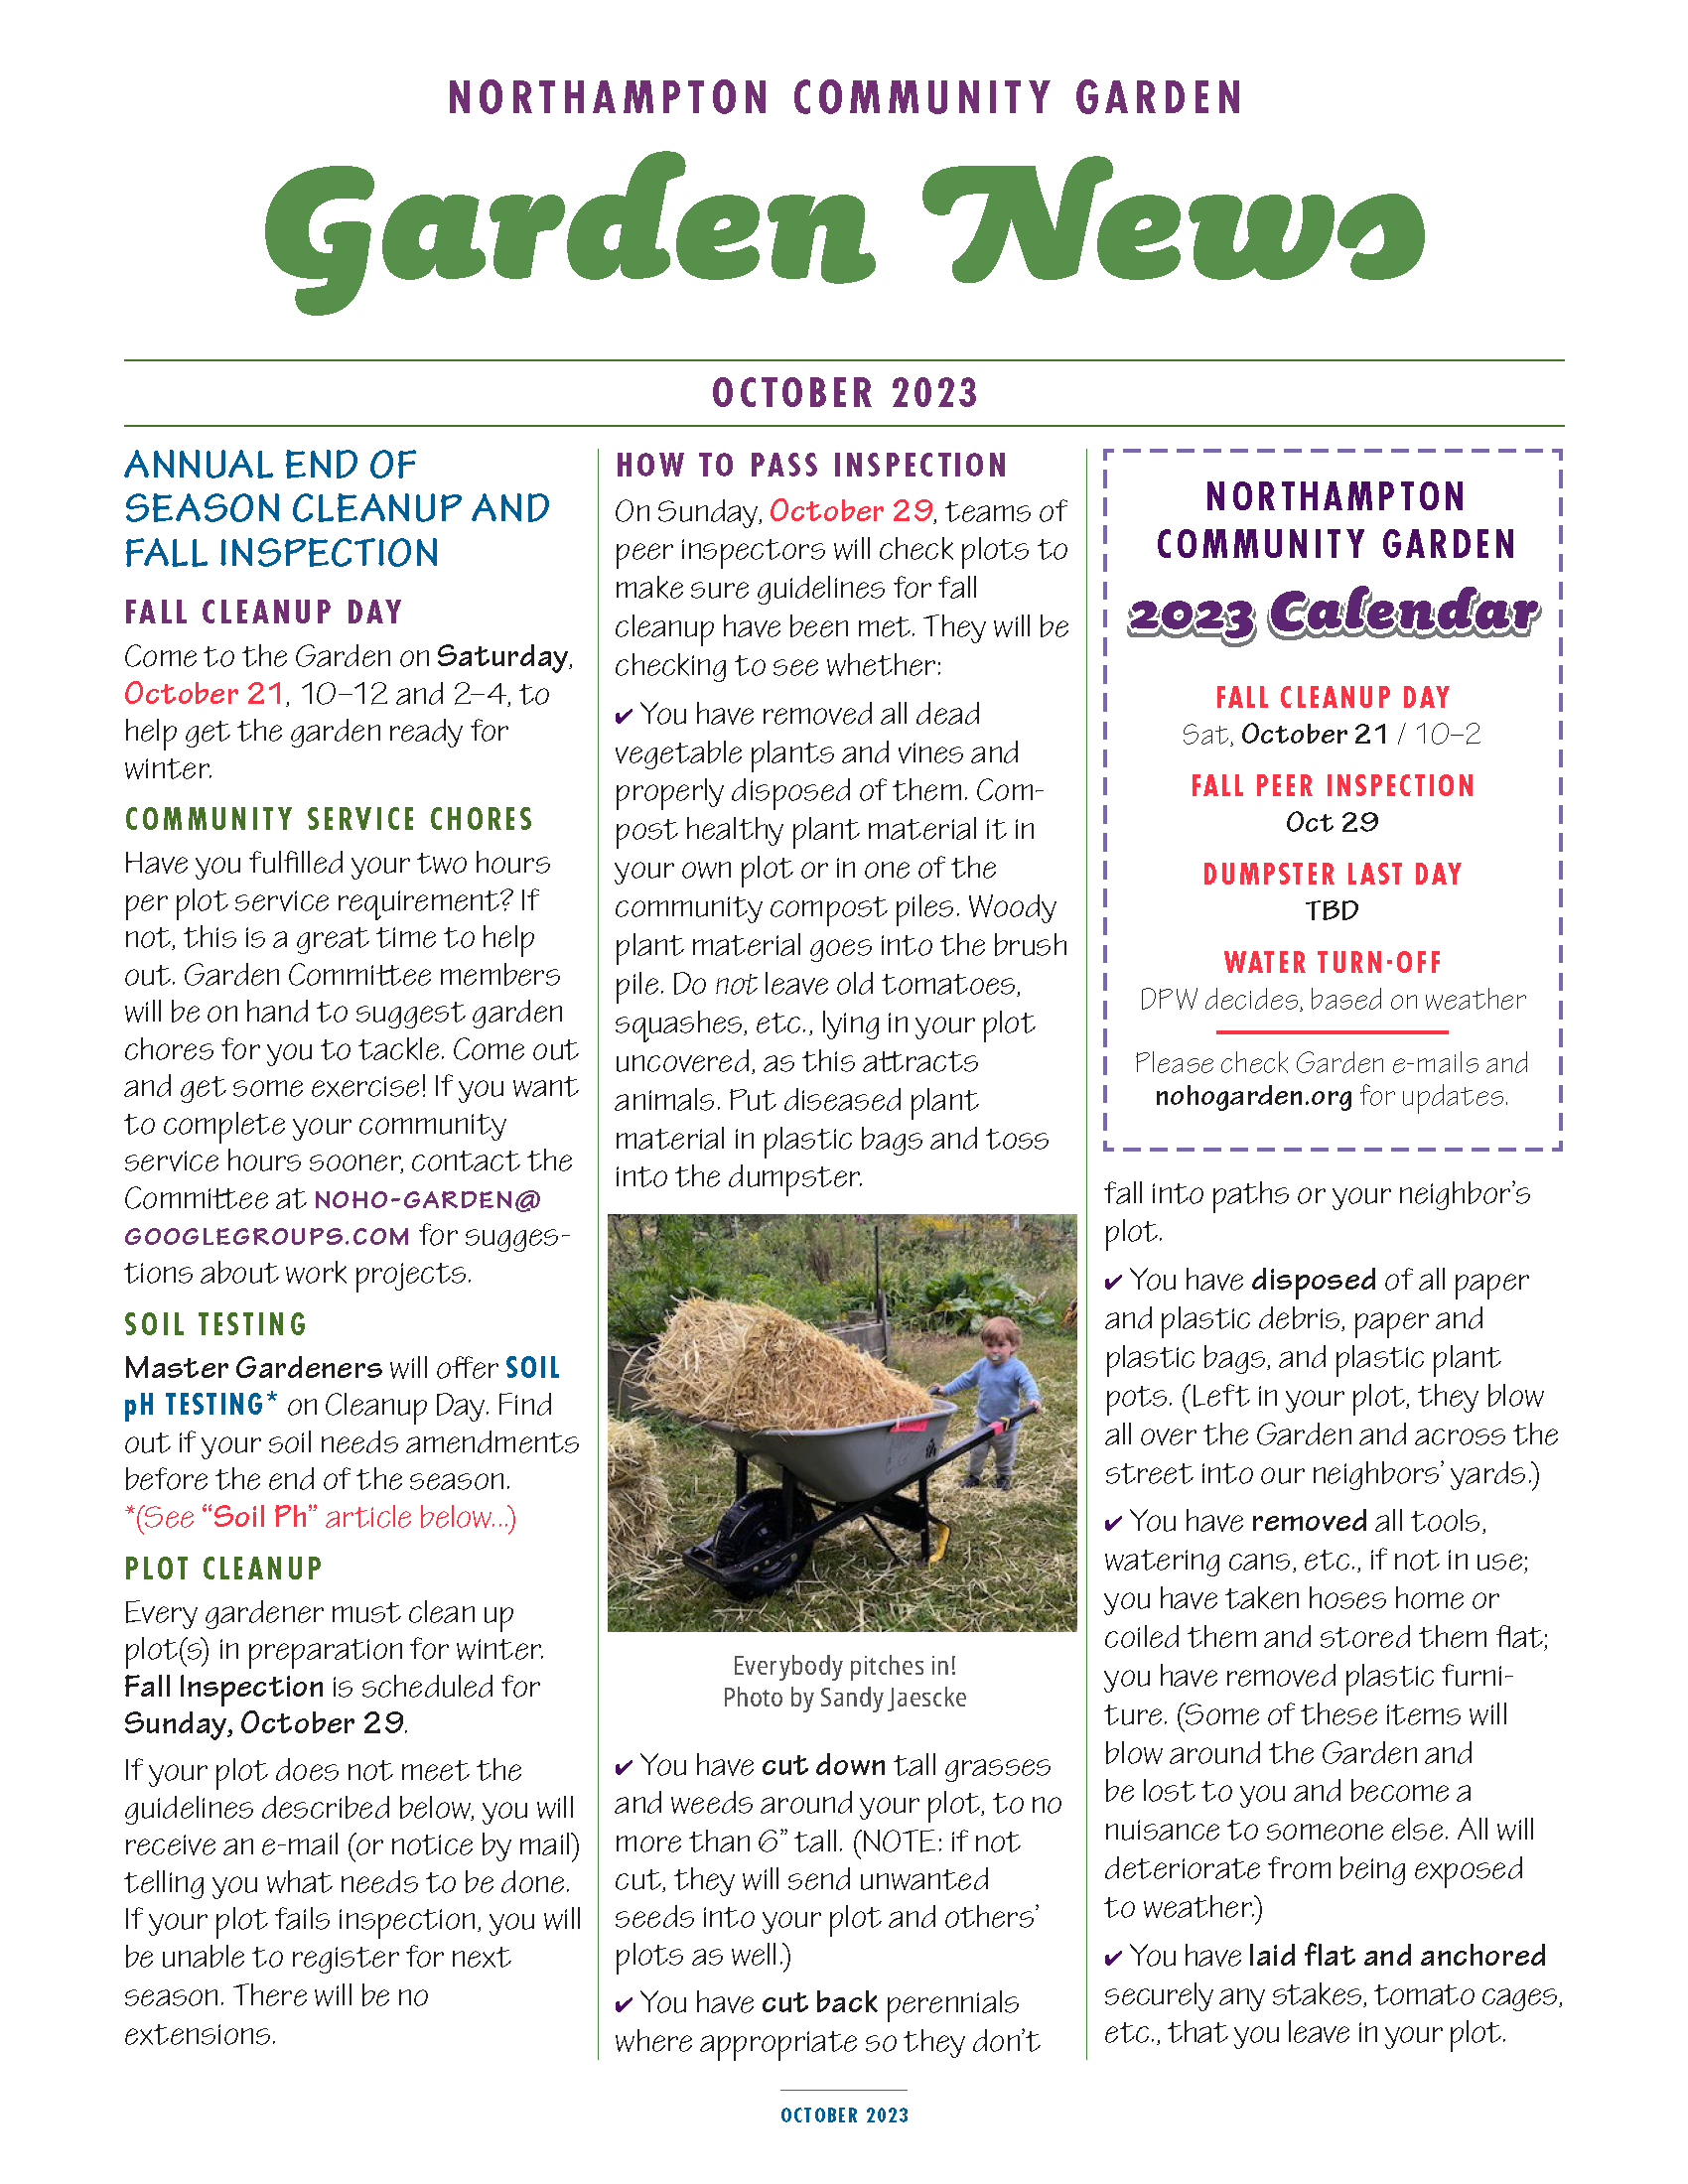 Cover of the October 2023 Garden News